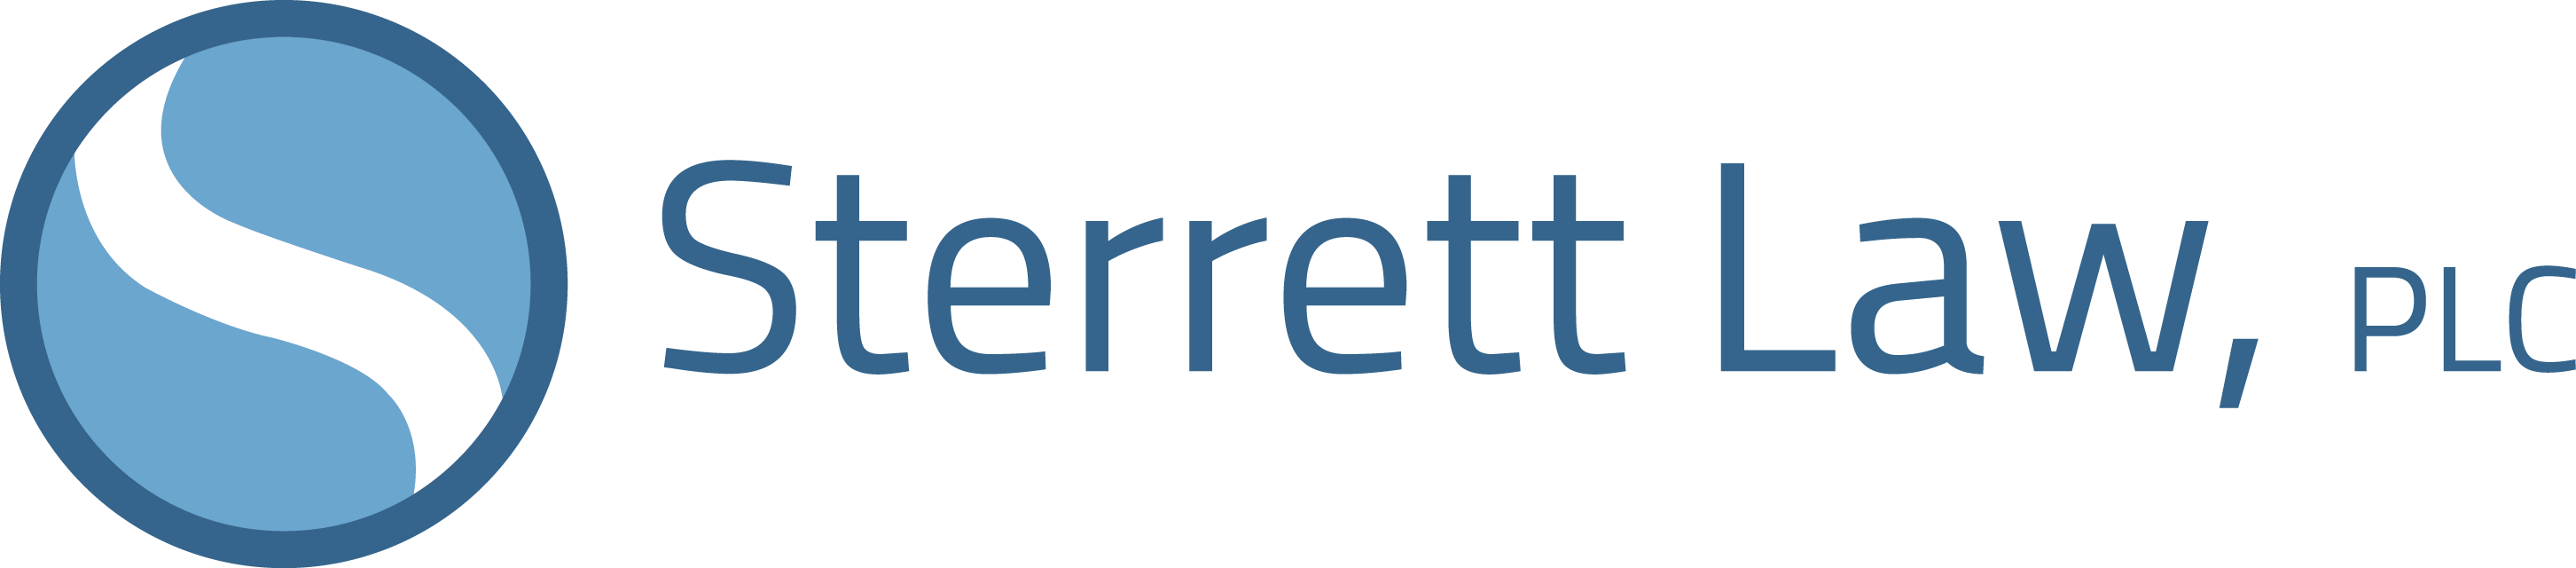 Sterrett Law logo